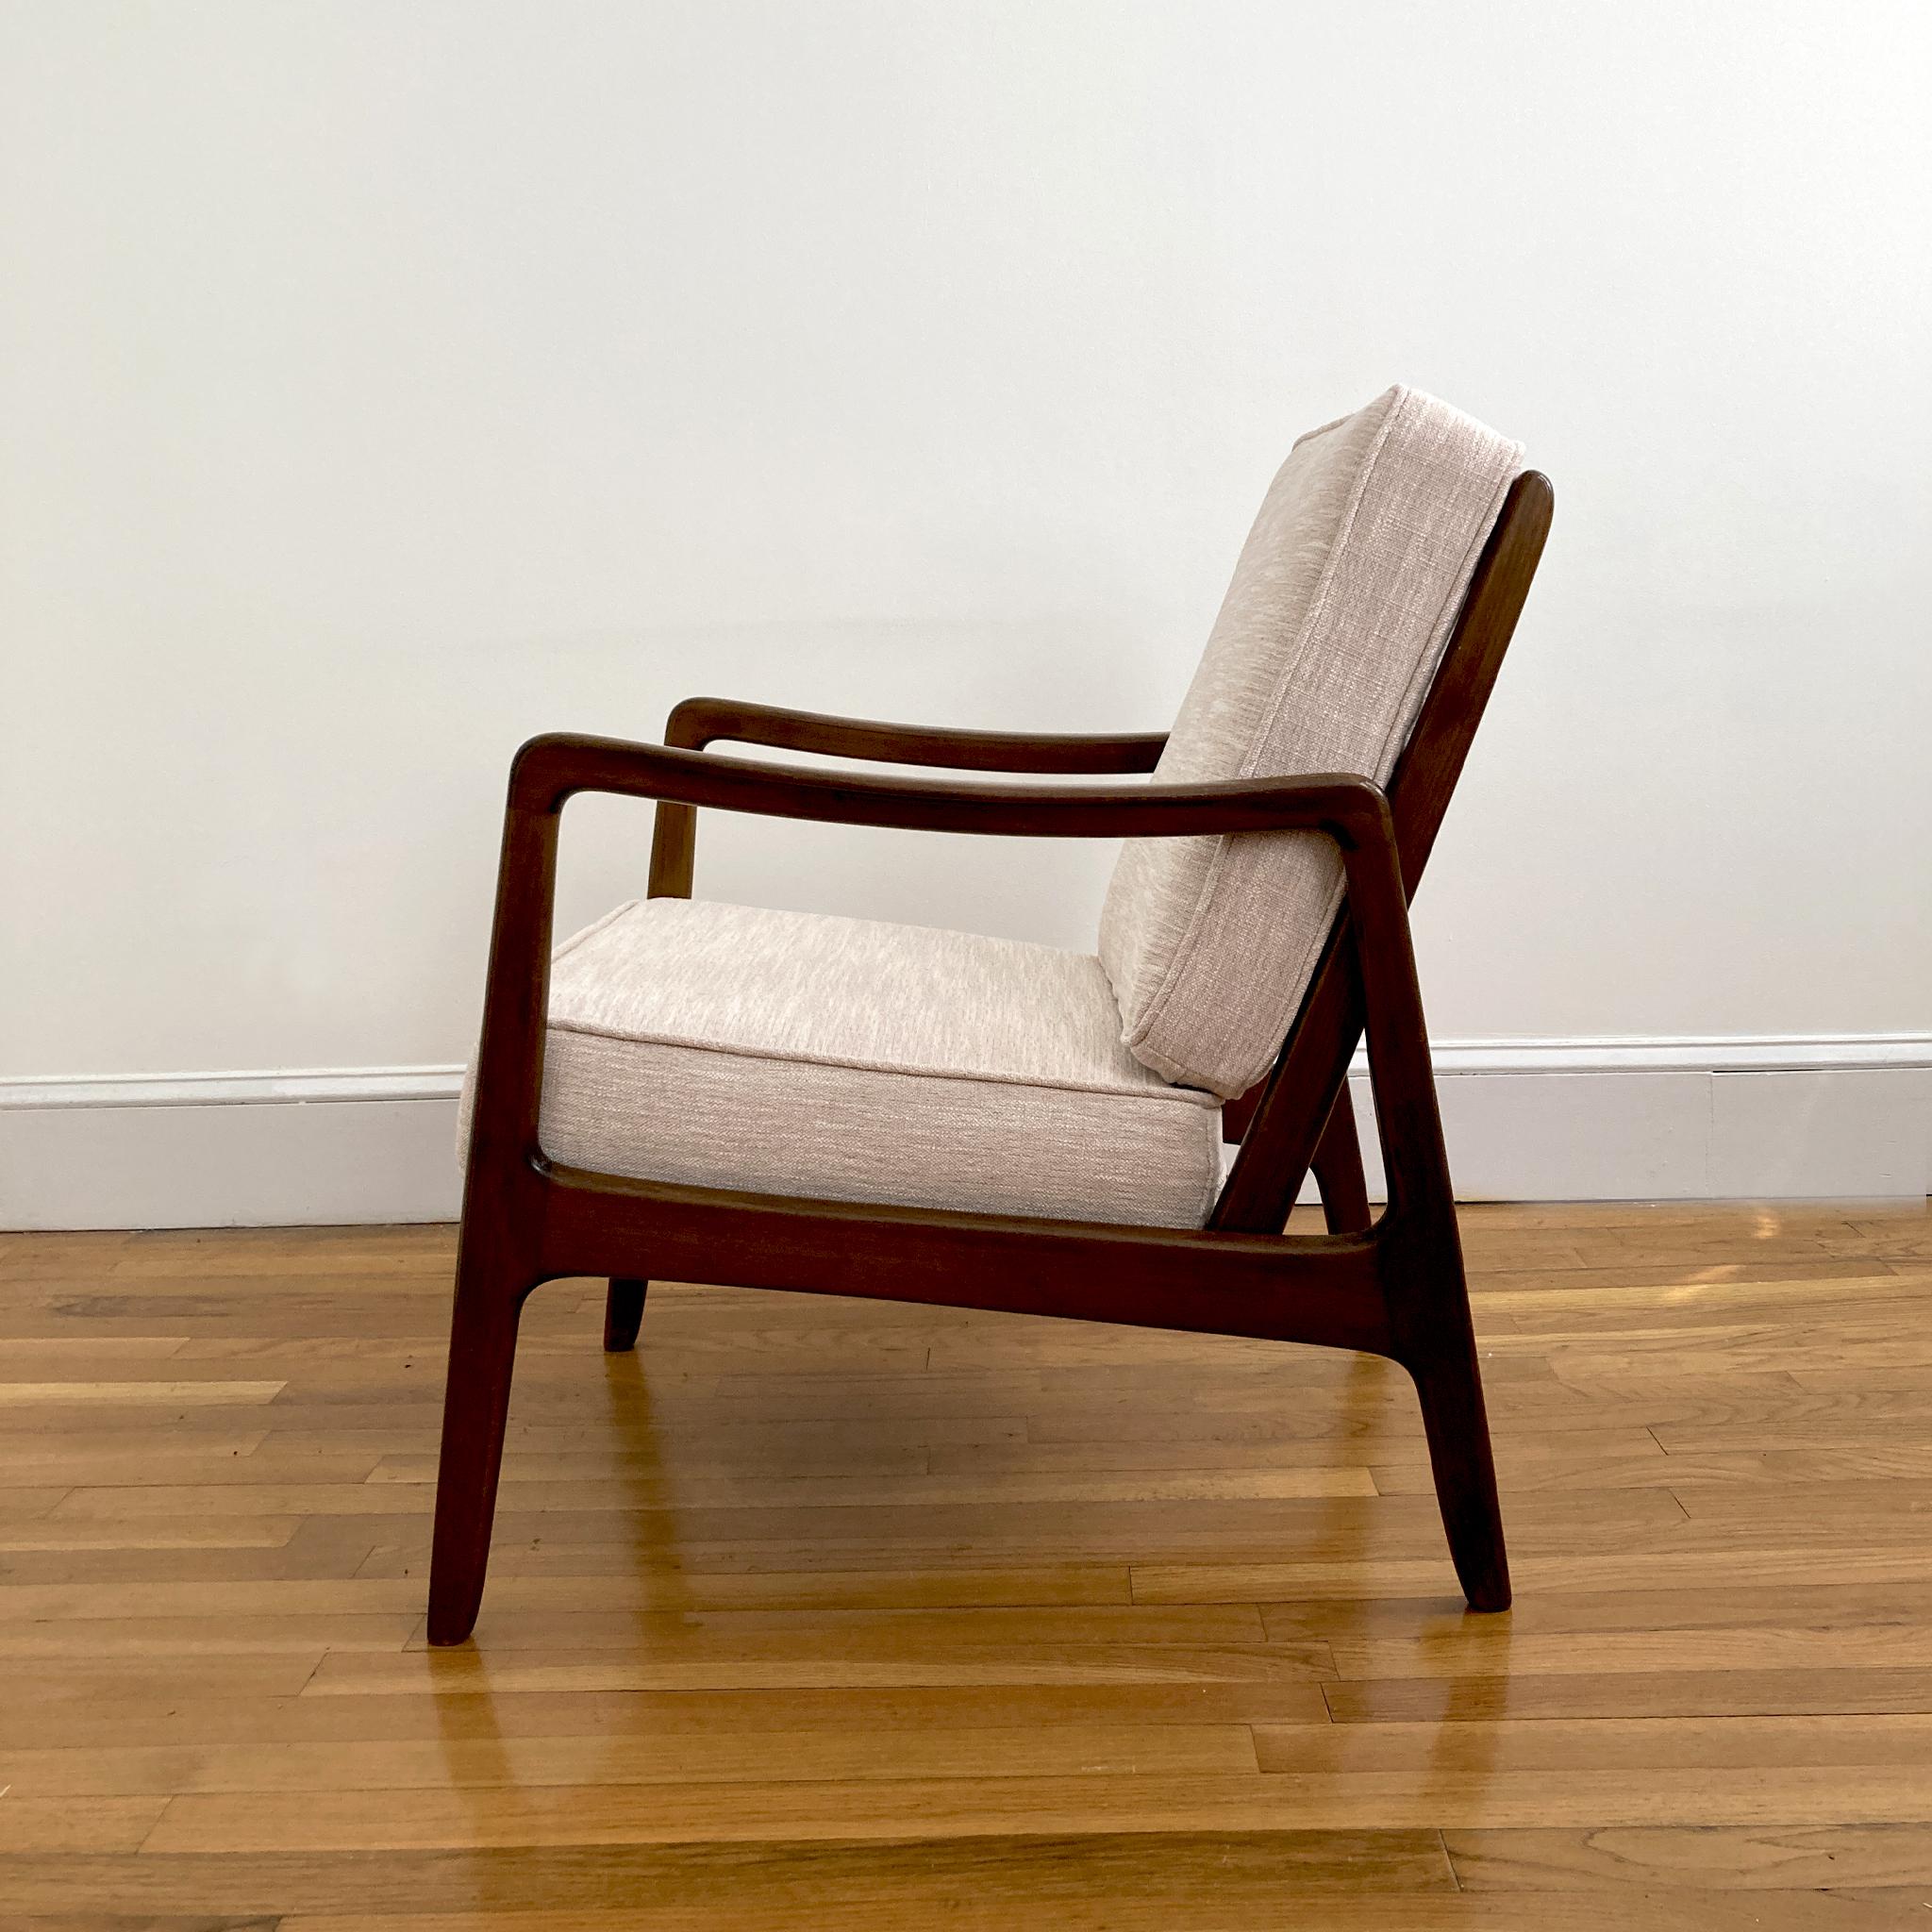 Milieu du XXe siècle Ole Wanscher for John Stuart Walnut Lounge Chair Reupholstered in Blush Tweed (Chaise longue en noyer recouverte de tweed blush)